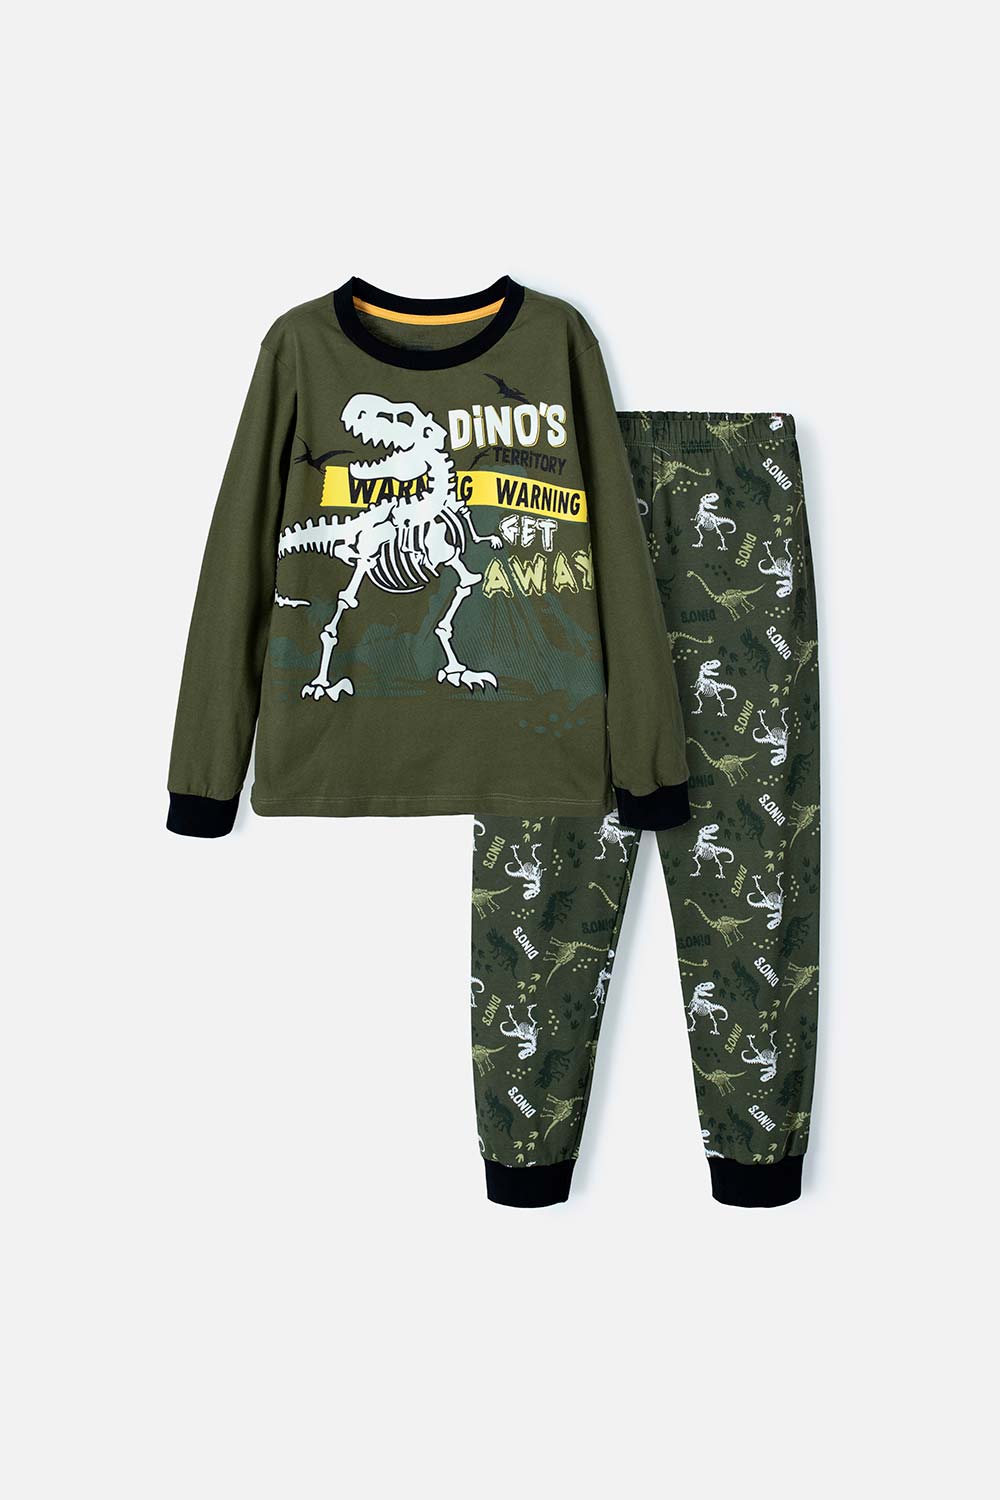 Pijama para bebé niño de dinosaurios, manga larga de LittleMIC. - Tienda  Online MIC